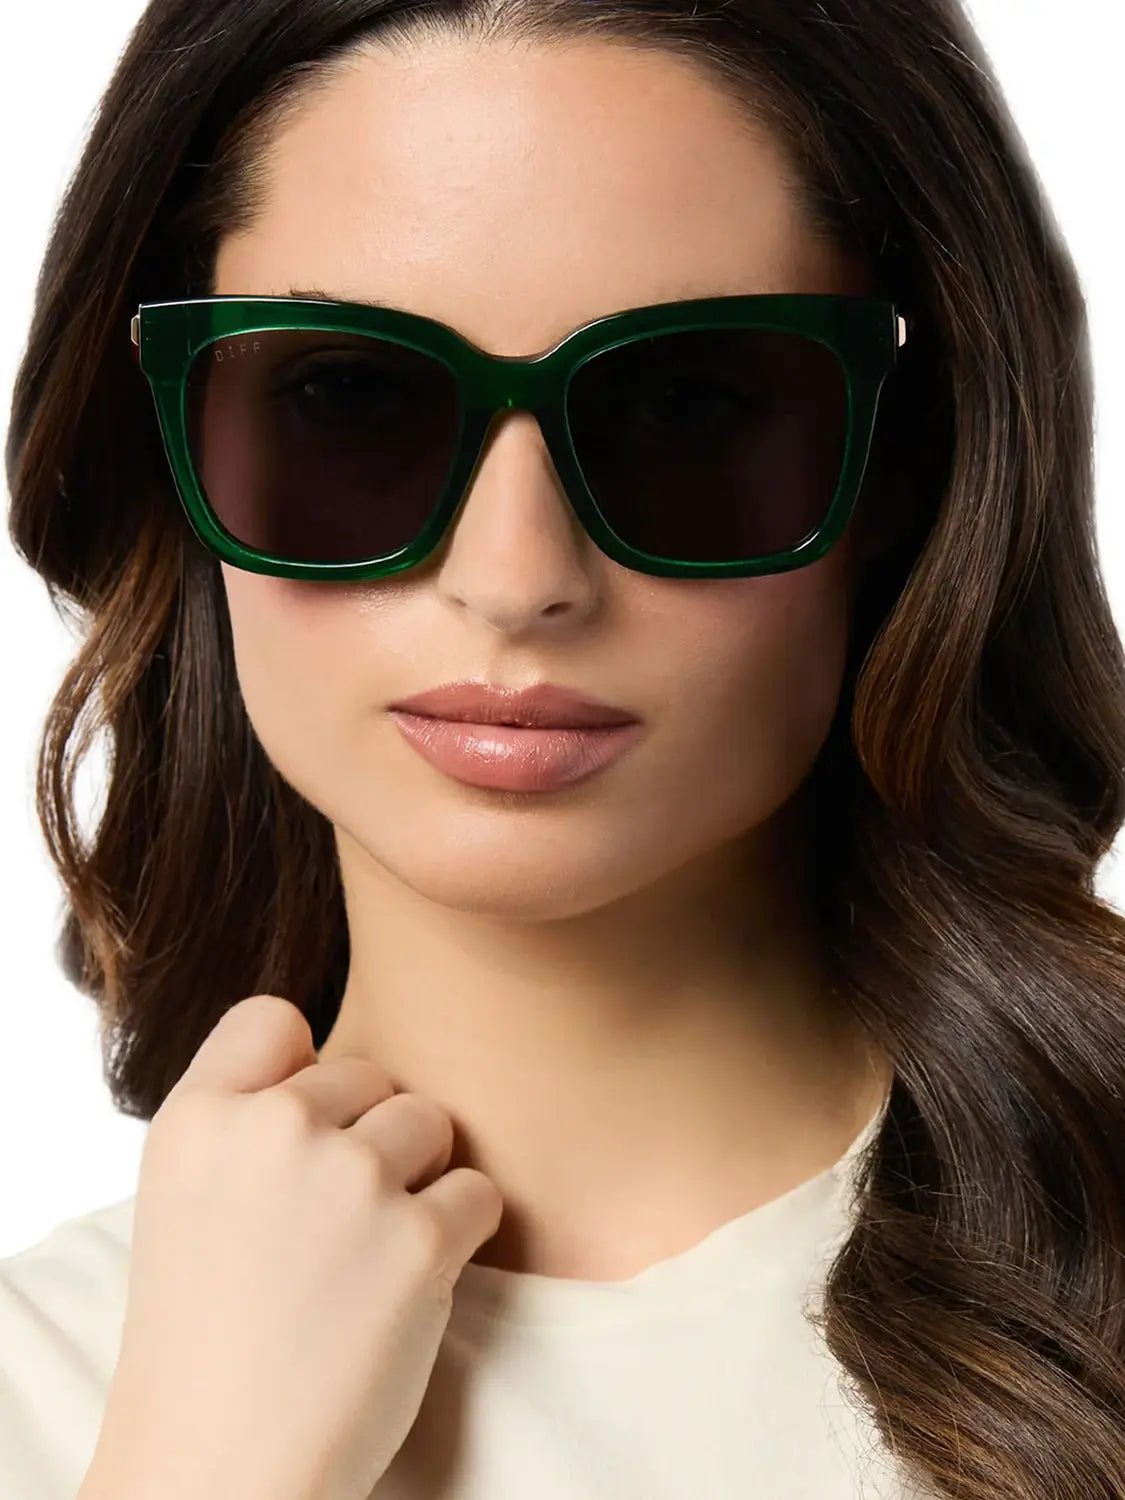 DIFF eyewear bella sunglasses in palm green crystal and grey polarized